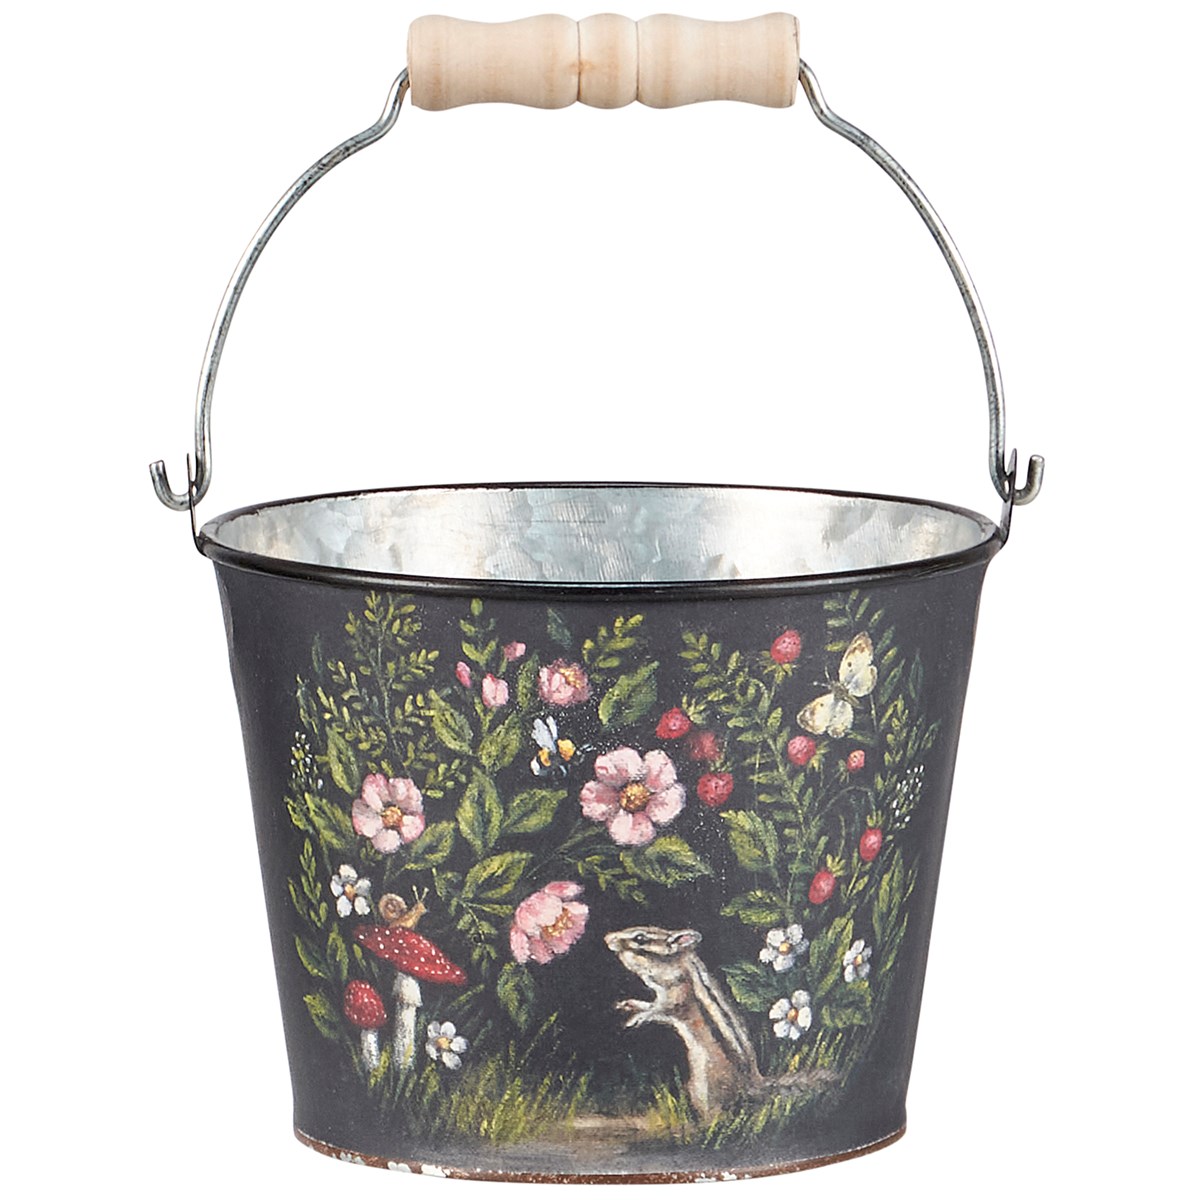 Woodland Spring Bucket Set - Metal, Paper, Wood